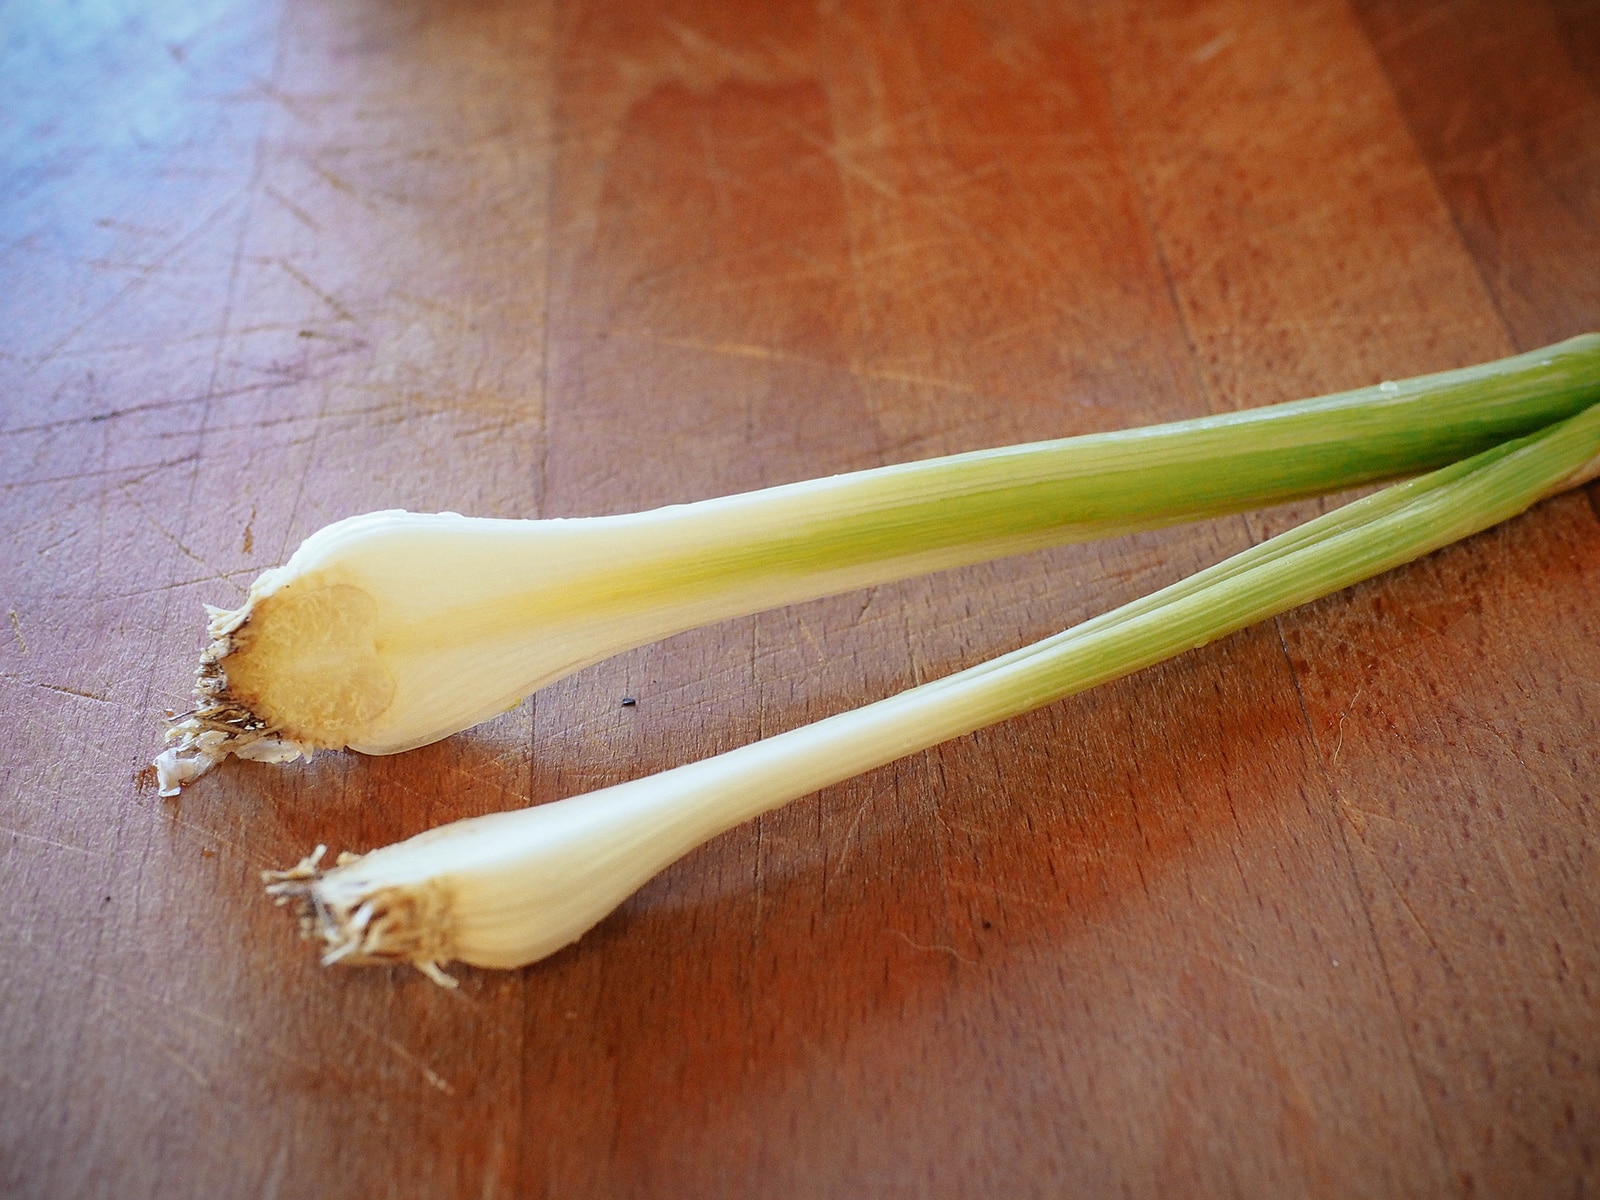 A green garlic stem and bulb split in half